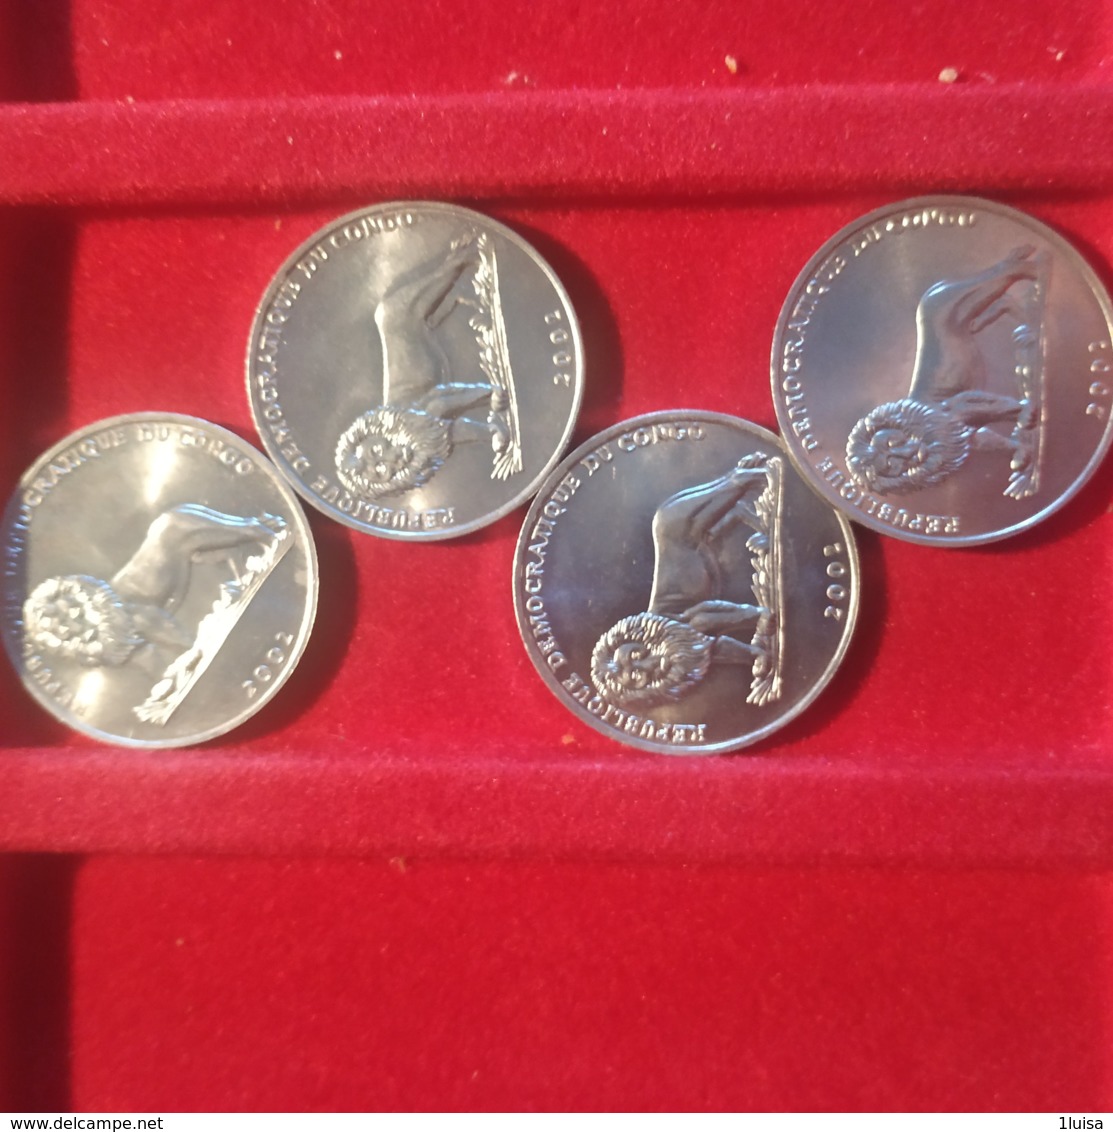 Congo Belga 50 Cents 2002 Per 4 - Congo (Repubblica Democratica 1998)